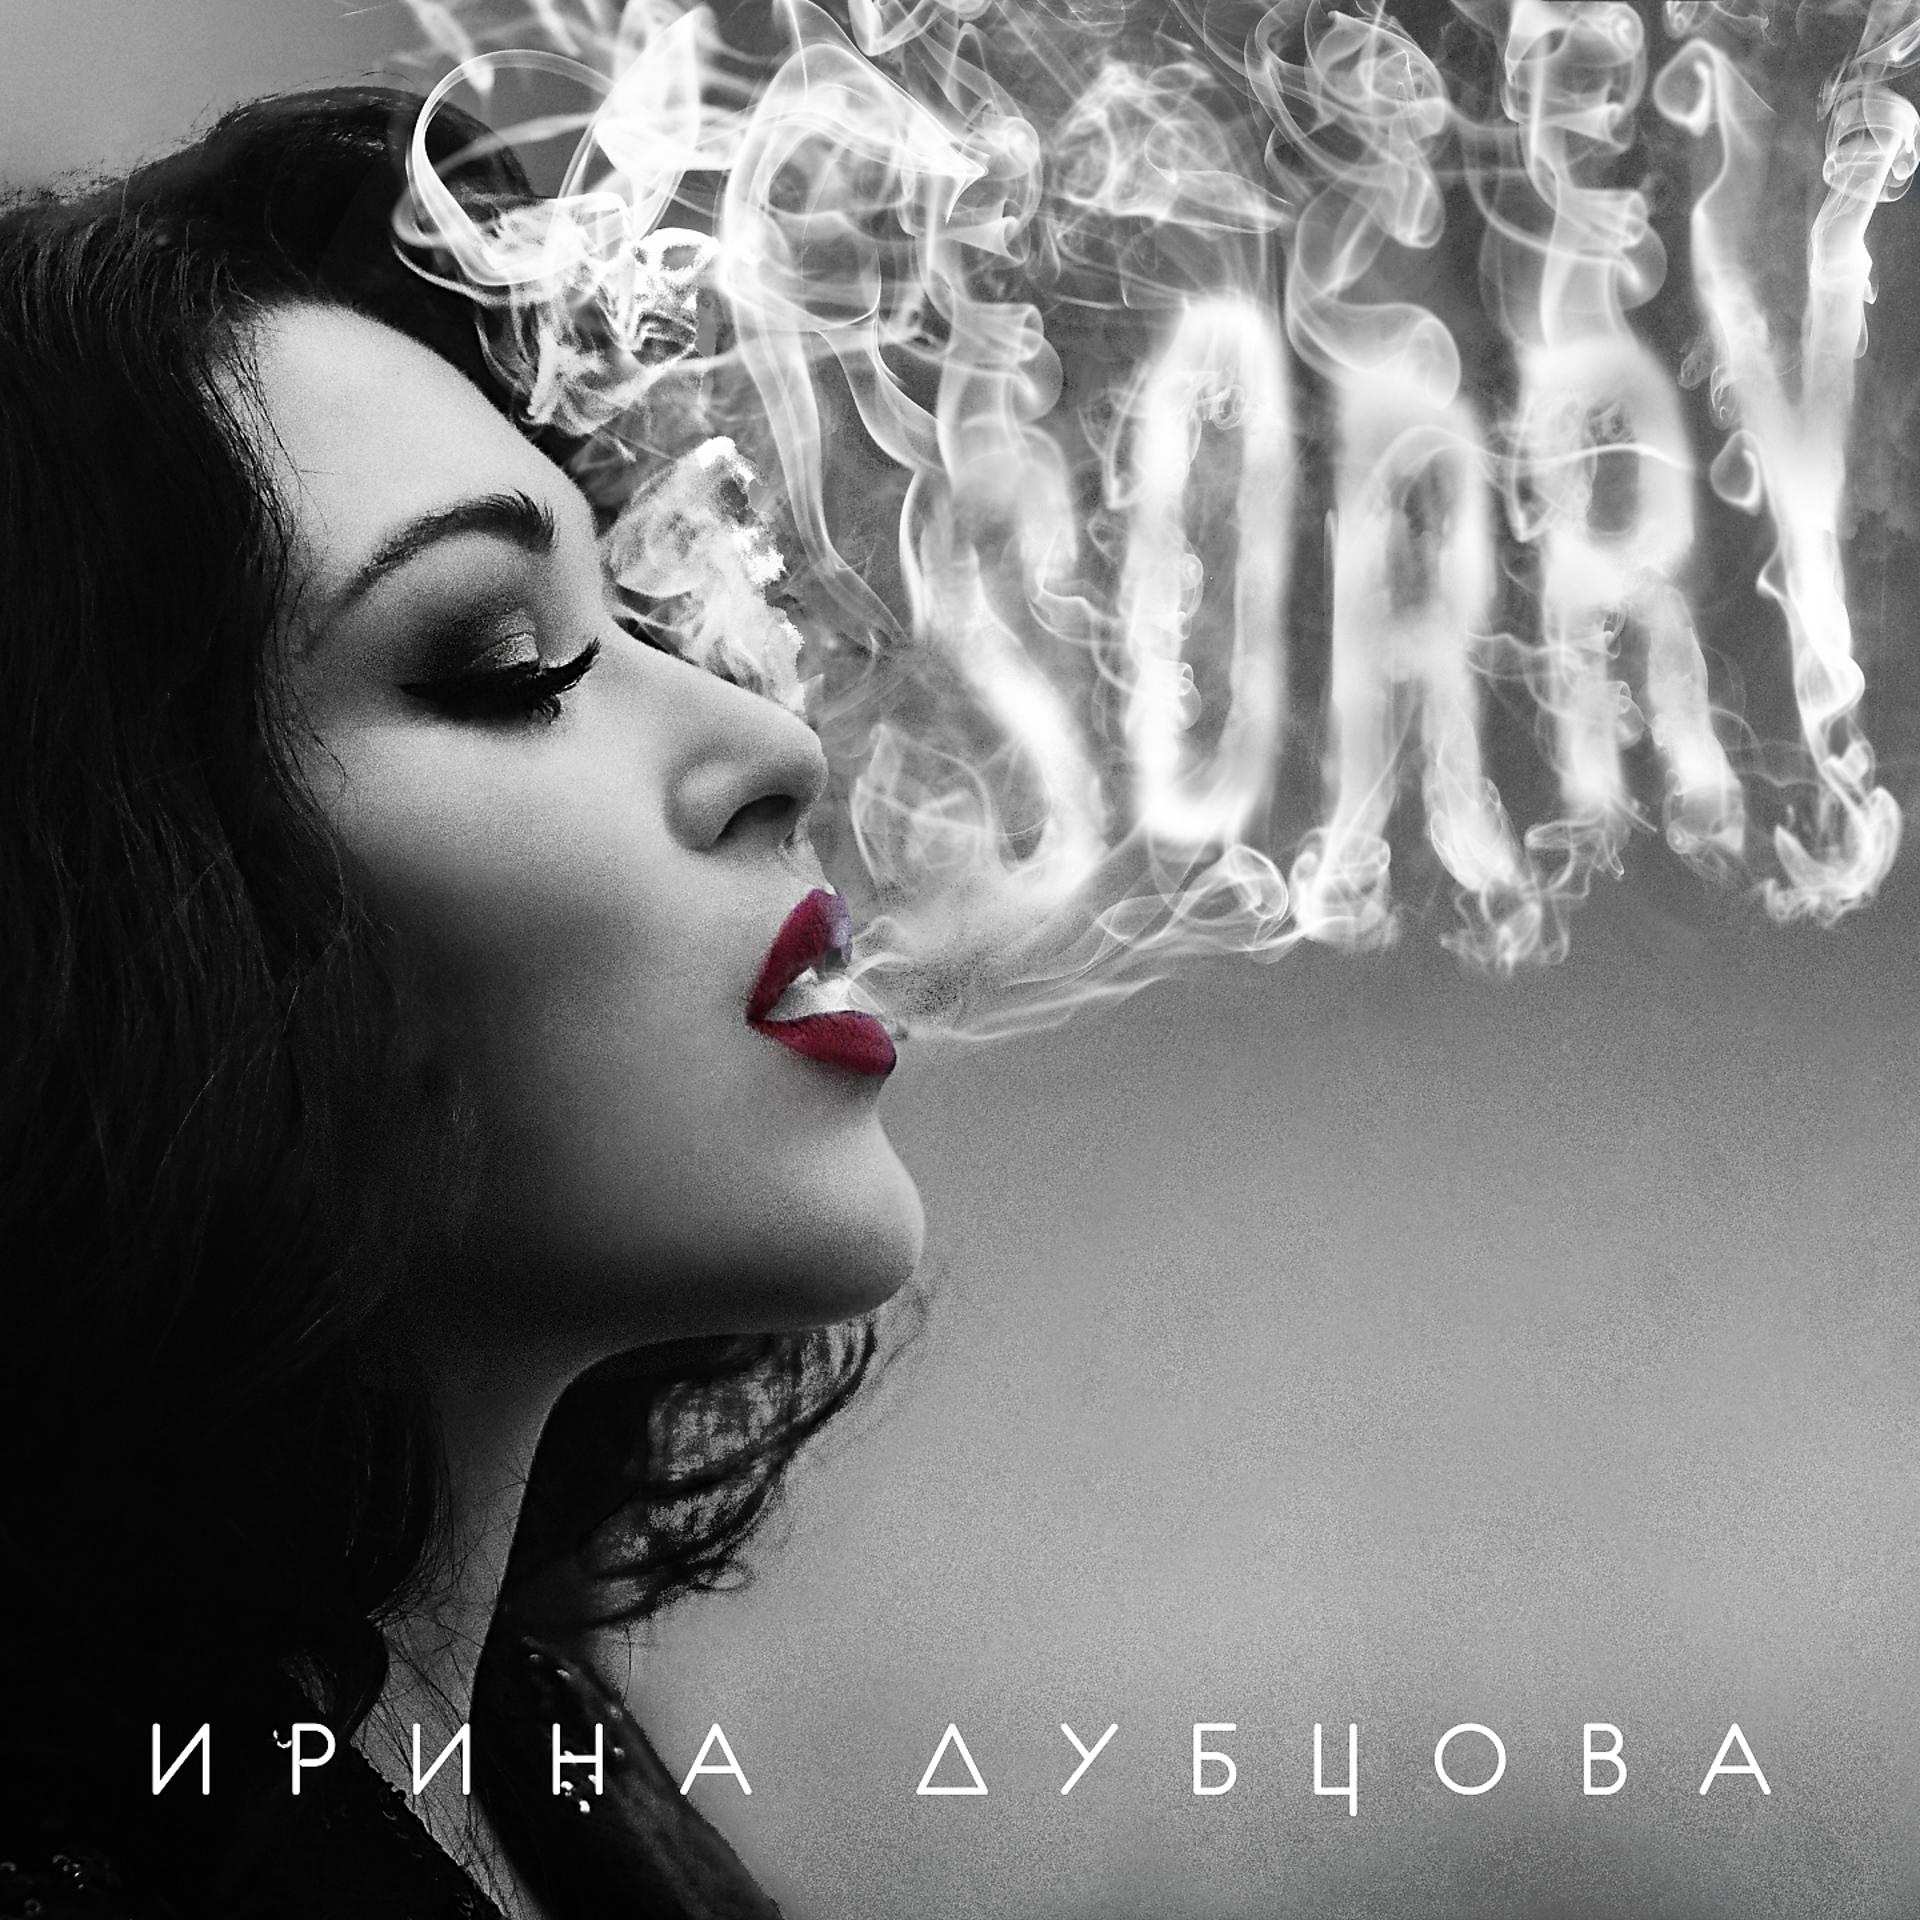 Постер к треку Ирина Дубцова - Поцелуй меня